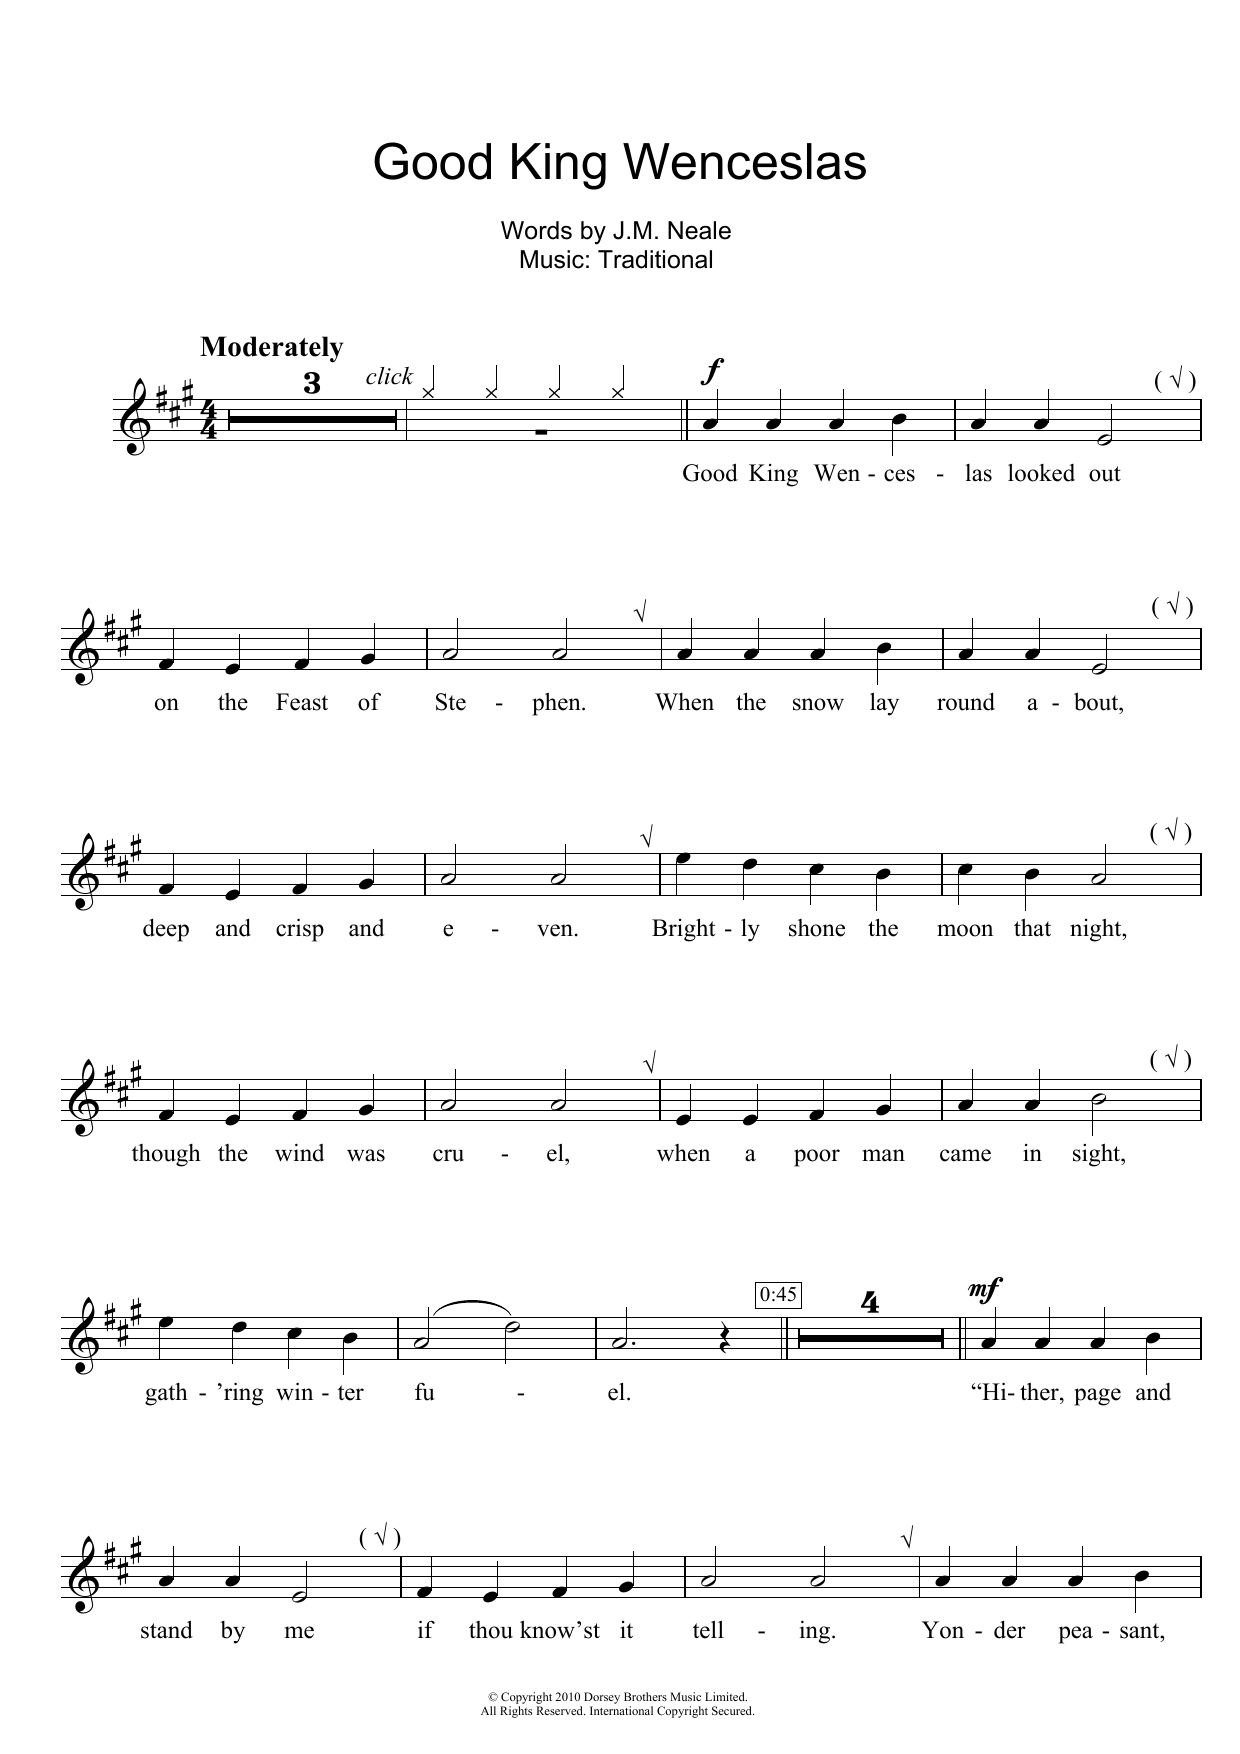 Traditional Carol Good King Wenceslas Sheet Music Notes & Chords for Clarinet - Download or Print PDF